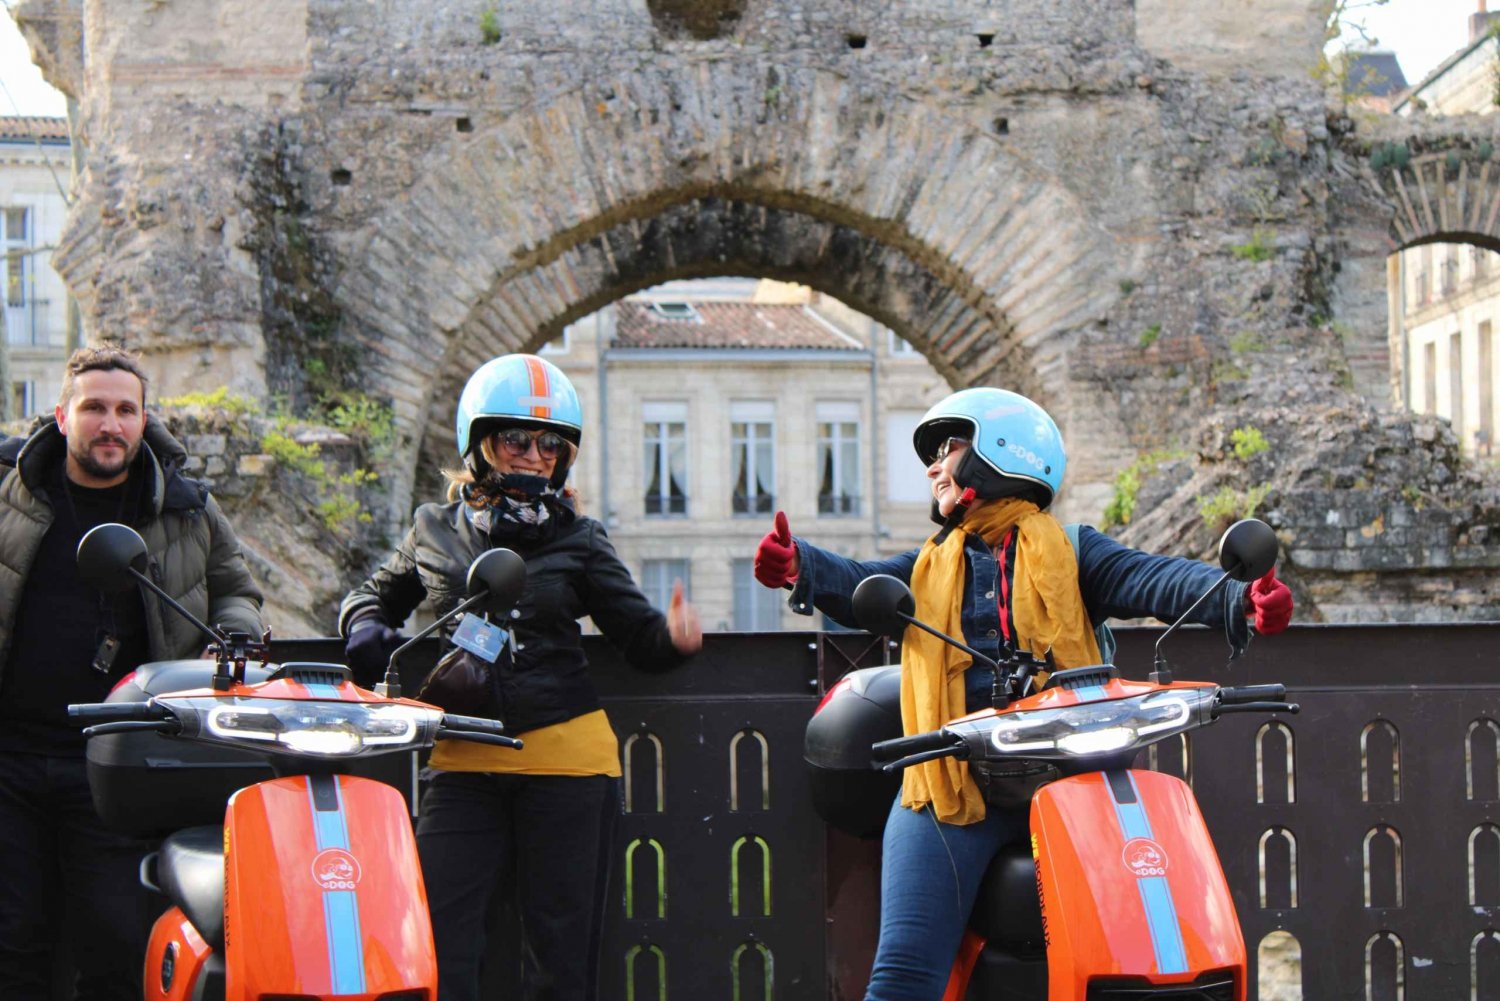 Discover Cité du Vin and ride for free